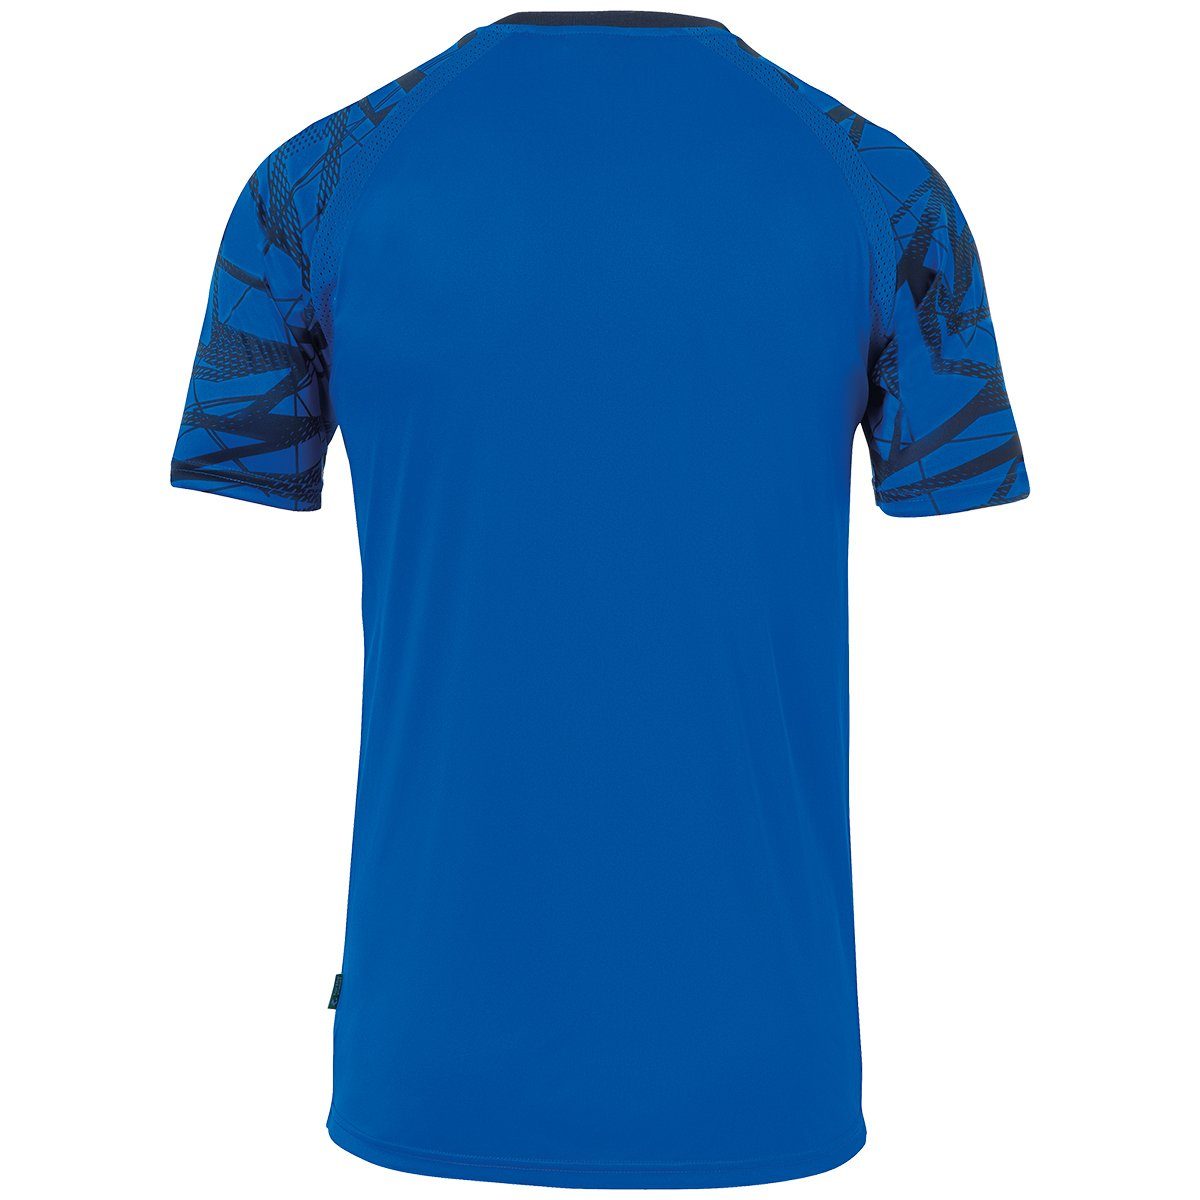 KURZARM atmungsaktiv uhlsport GOAL Trainings-T-Shirt Trainingsshirt TRIKOT azurblau/marine 25 uhlsport